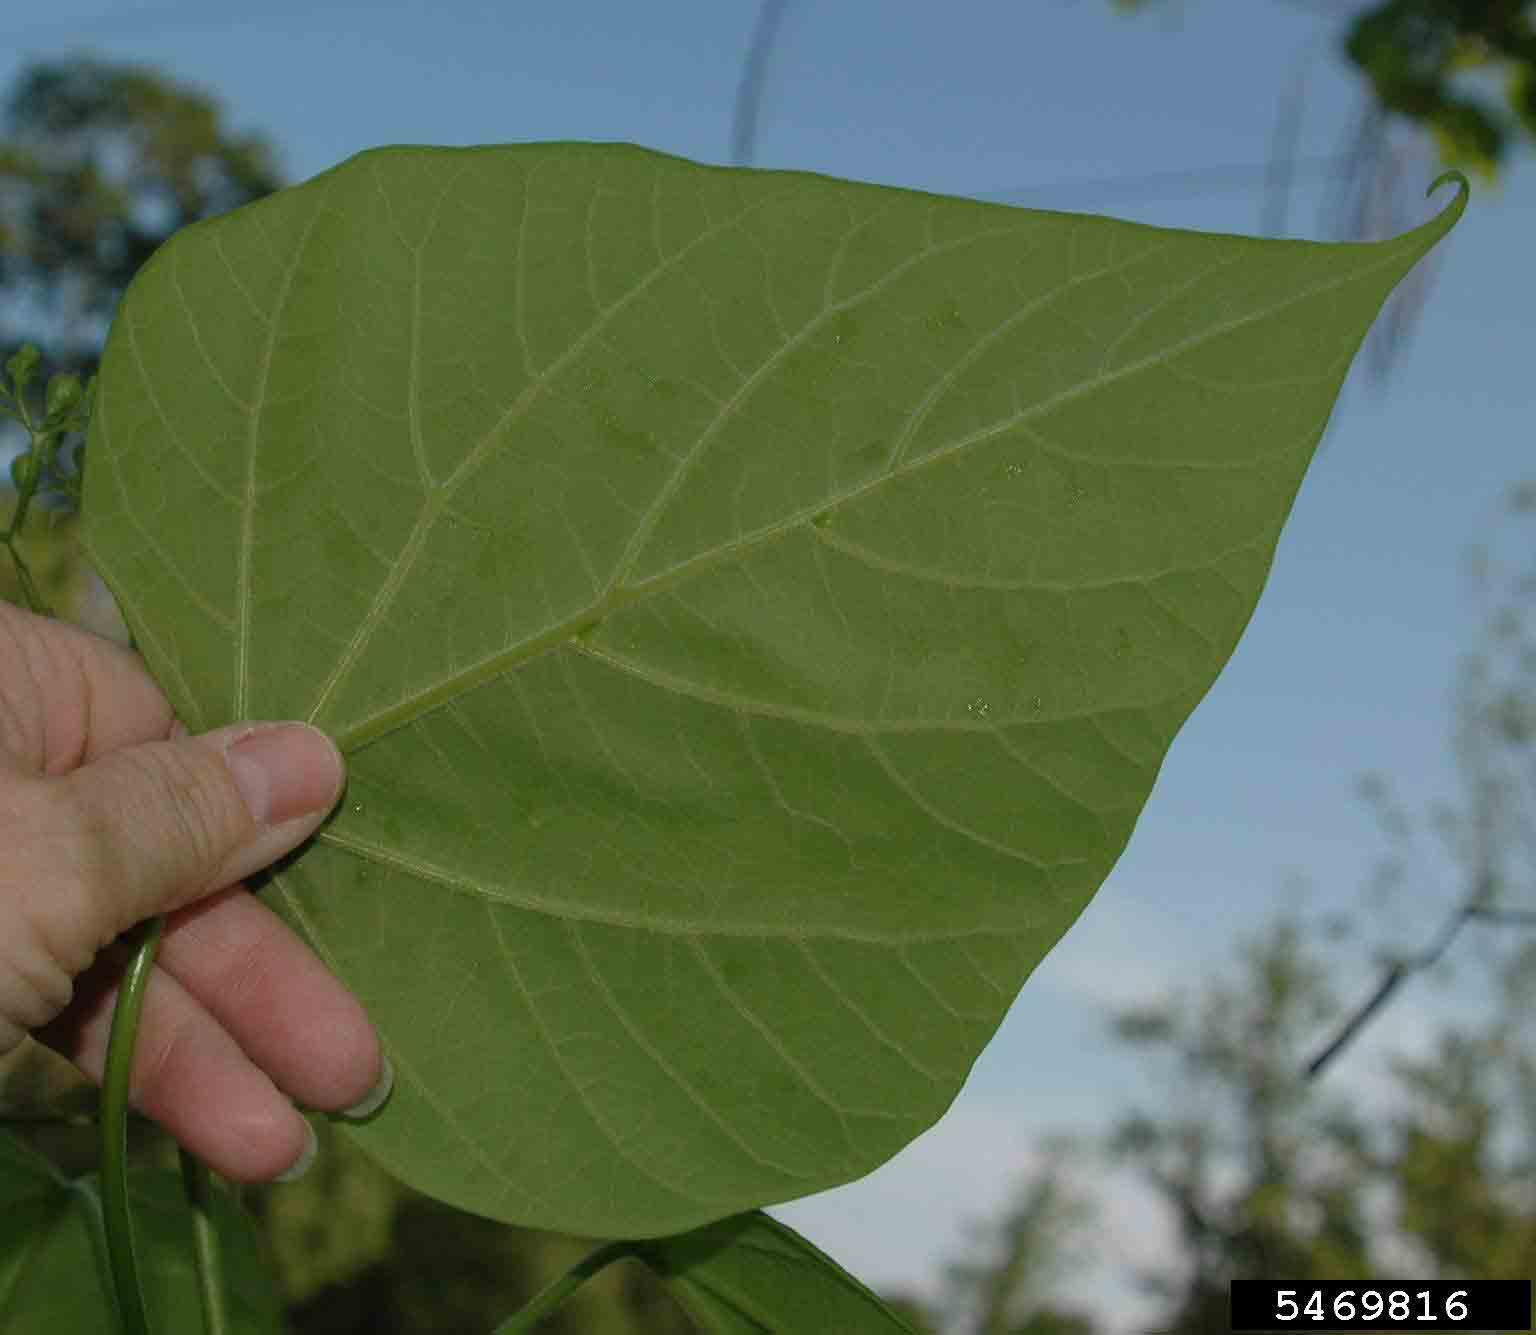 Southern catalpa leaf, underside